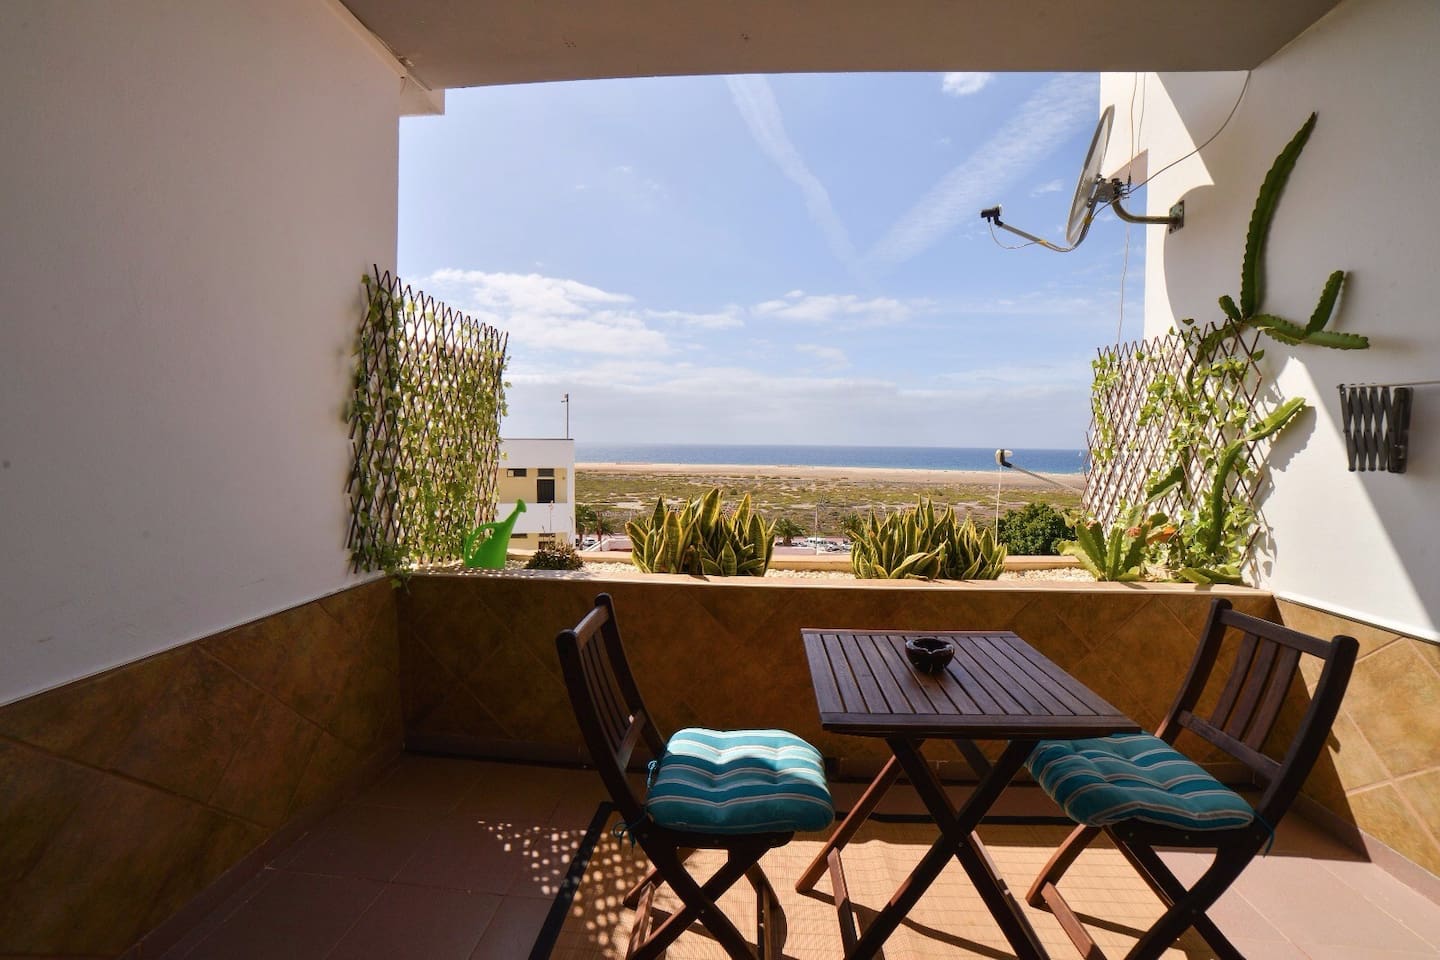 Best Airbnb in Fuerteventura 2018